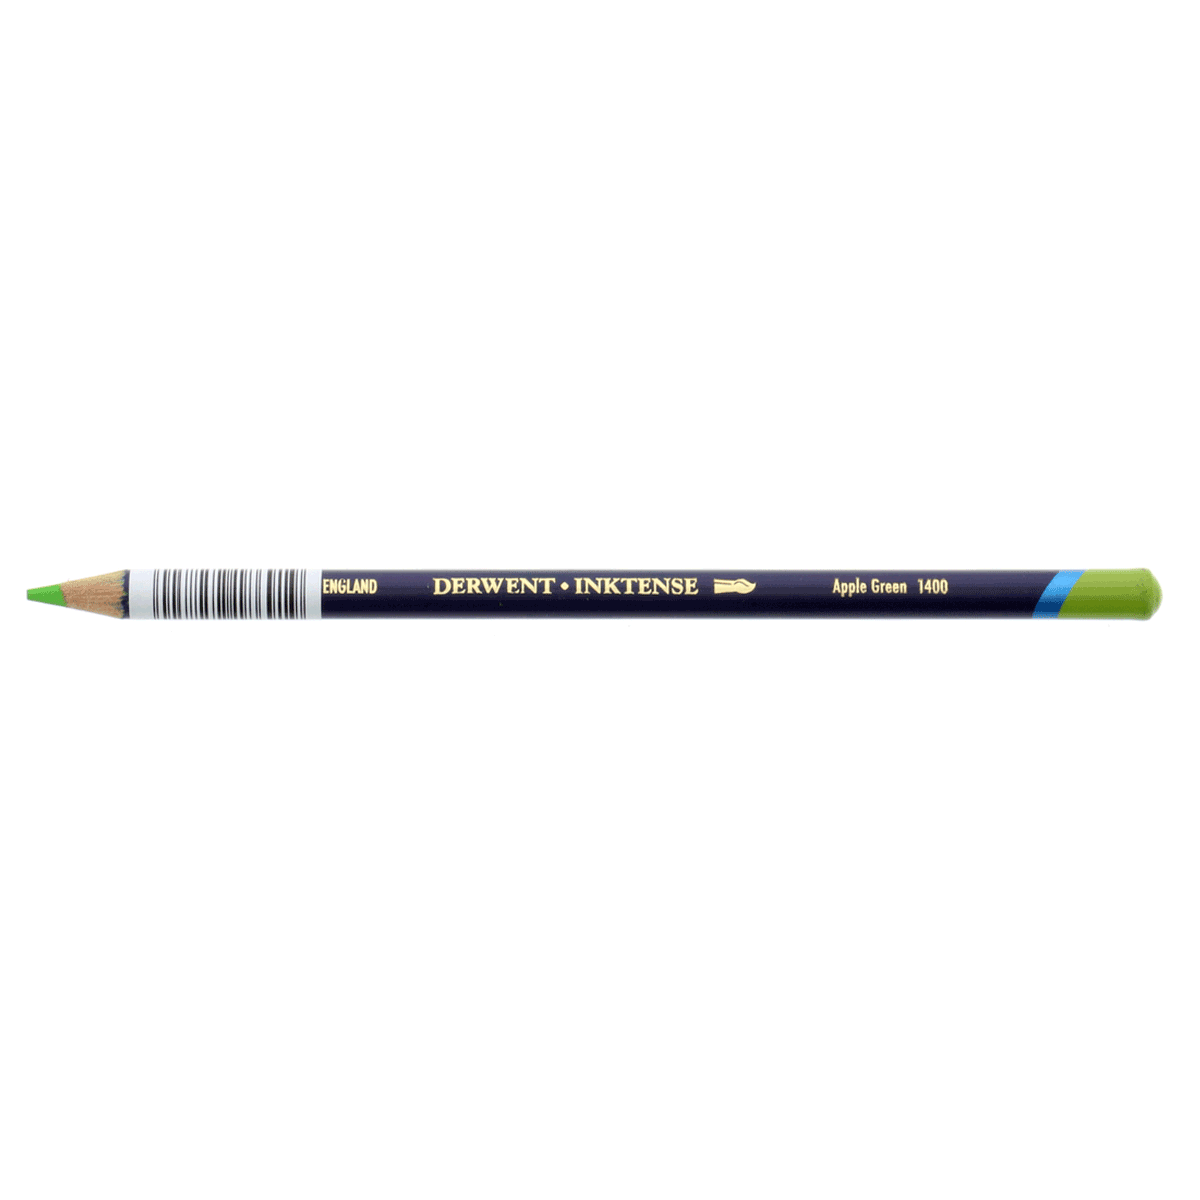 Inktense 1400 Apple Green Pencil